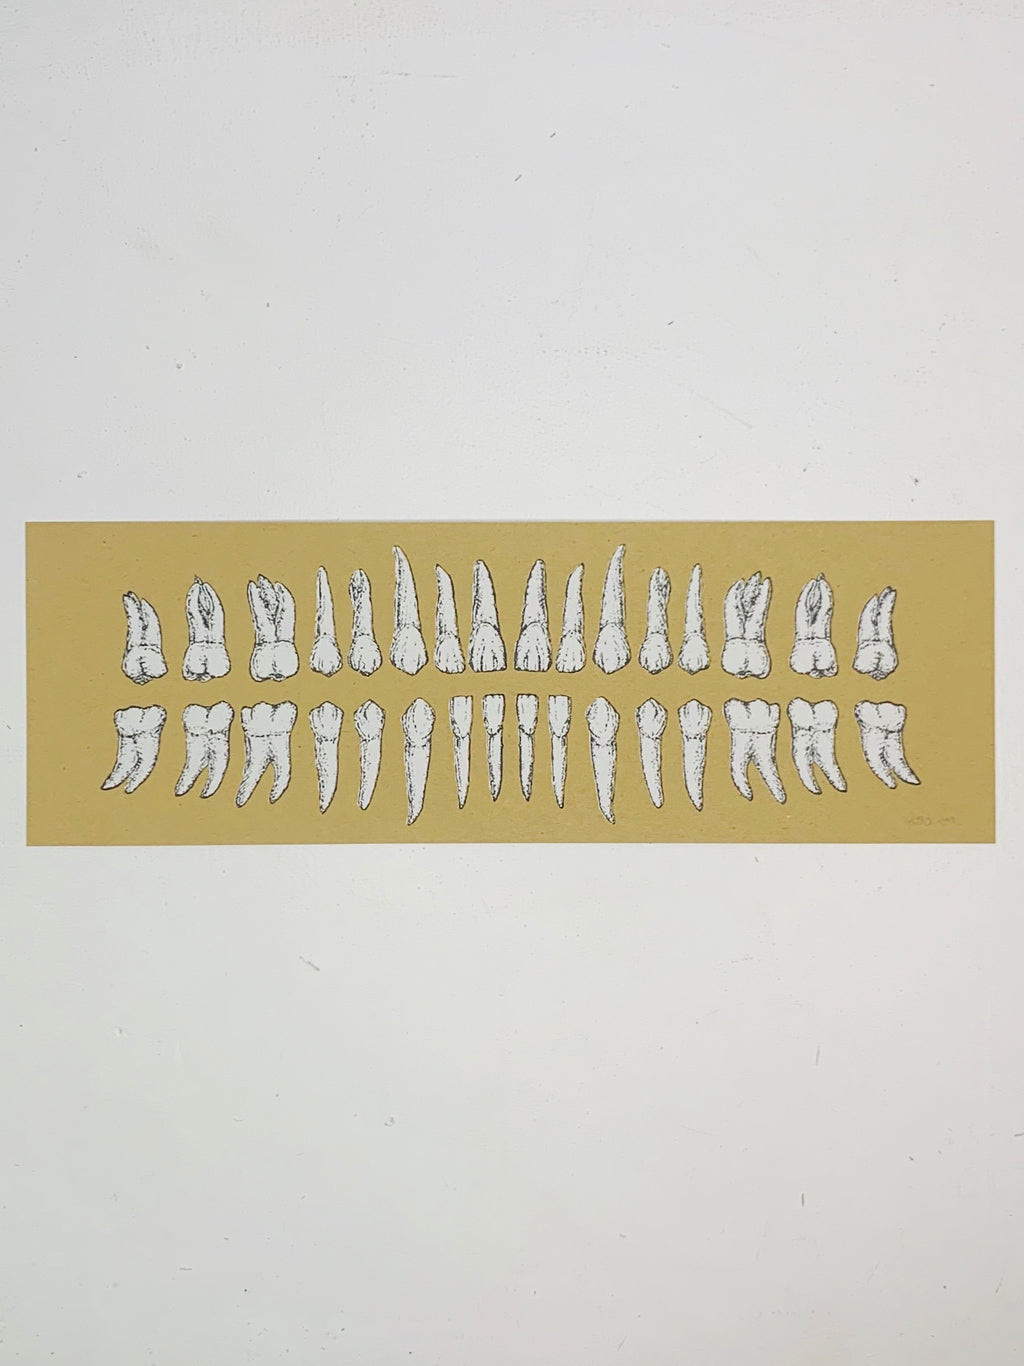 White Teeth 5” by 15” Screen Print by Kris Johnsen